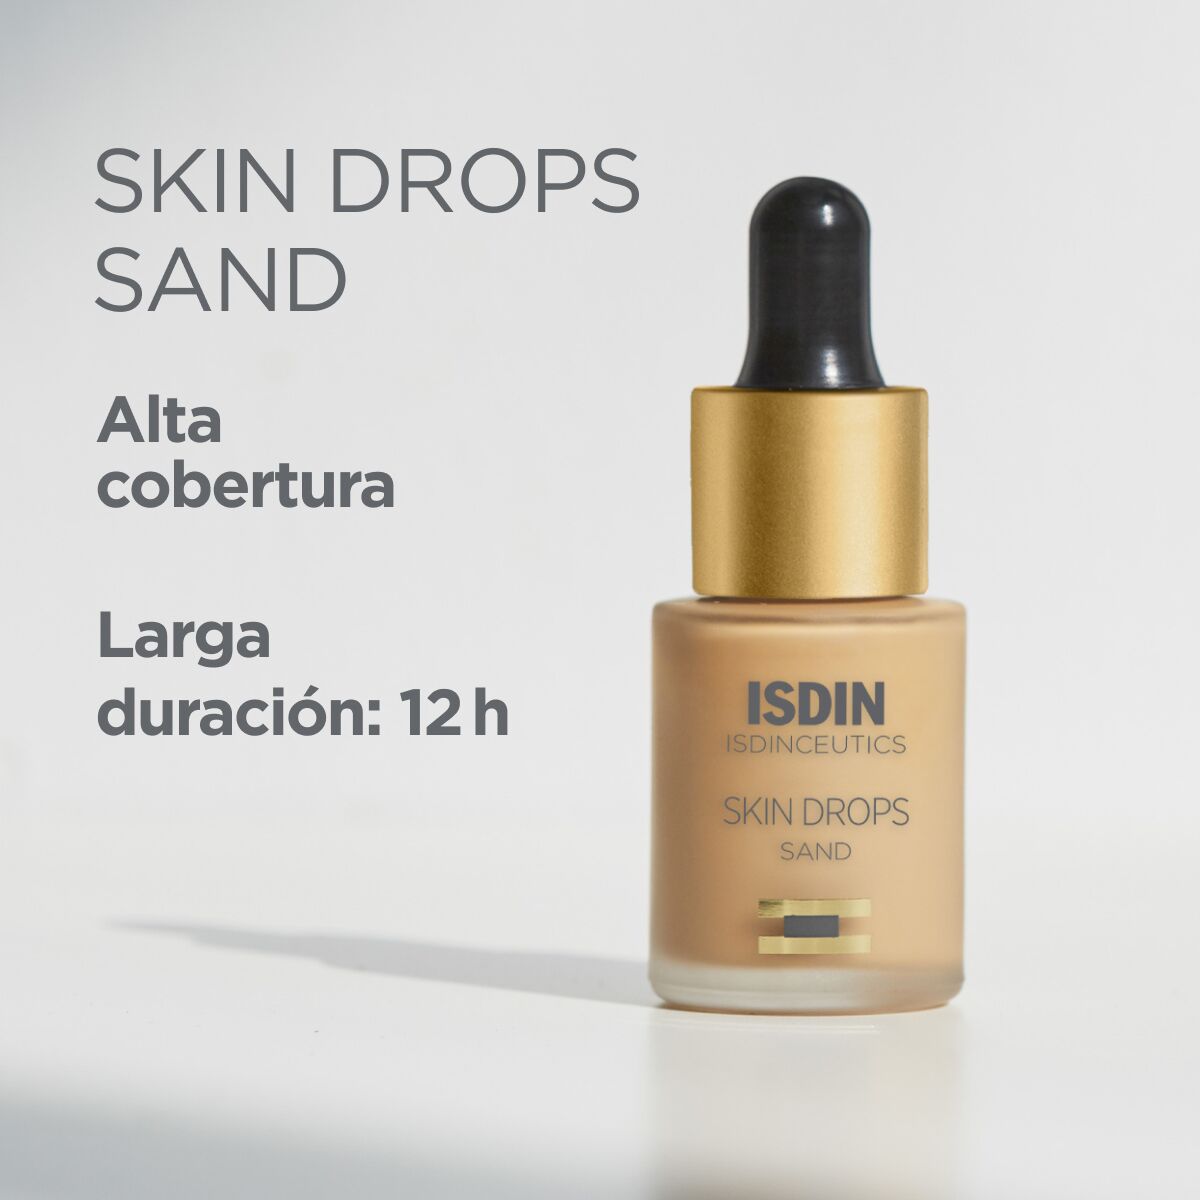 Isdin Isdinceutics maquillaje liquido skin drop color arena 15ml